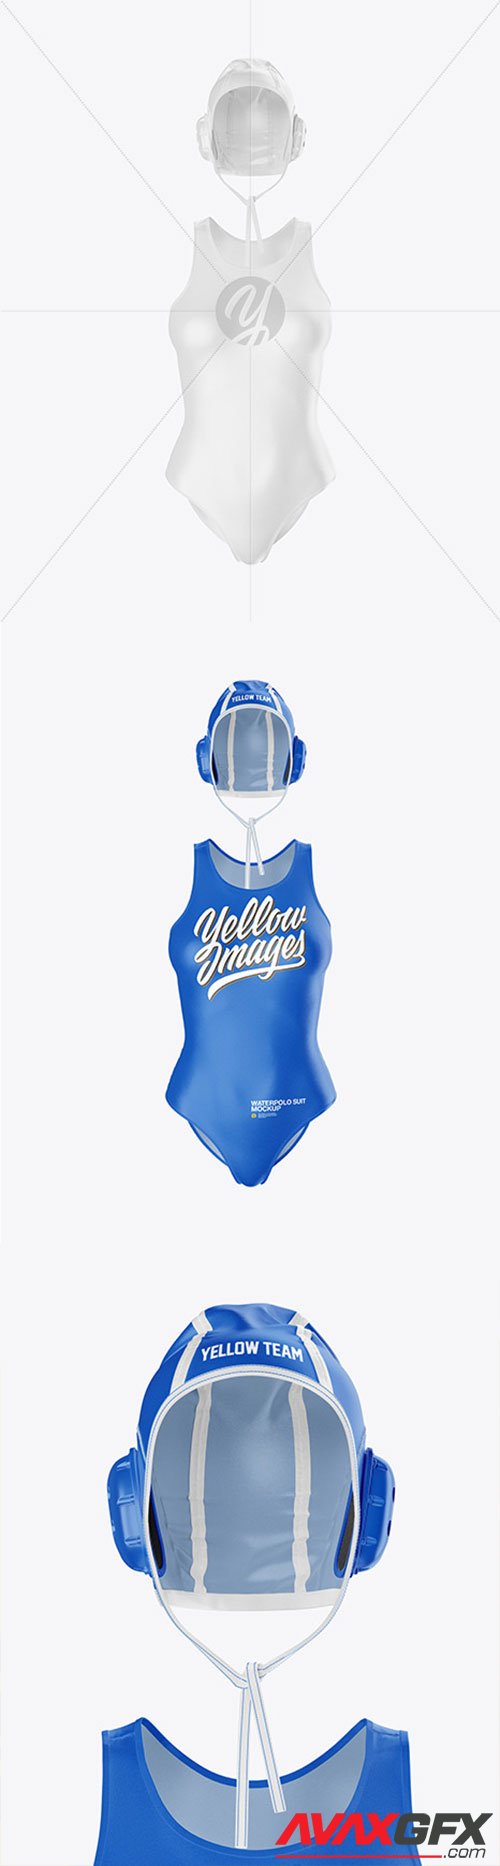 Women's Water Polo Suit 65603